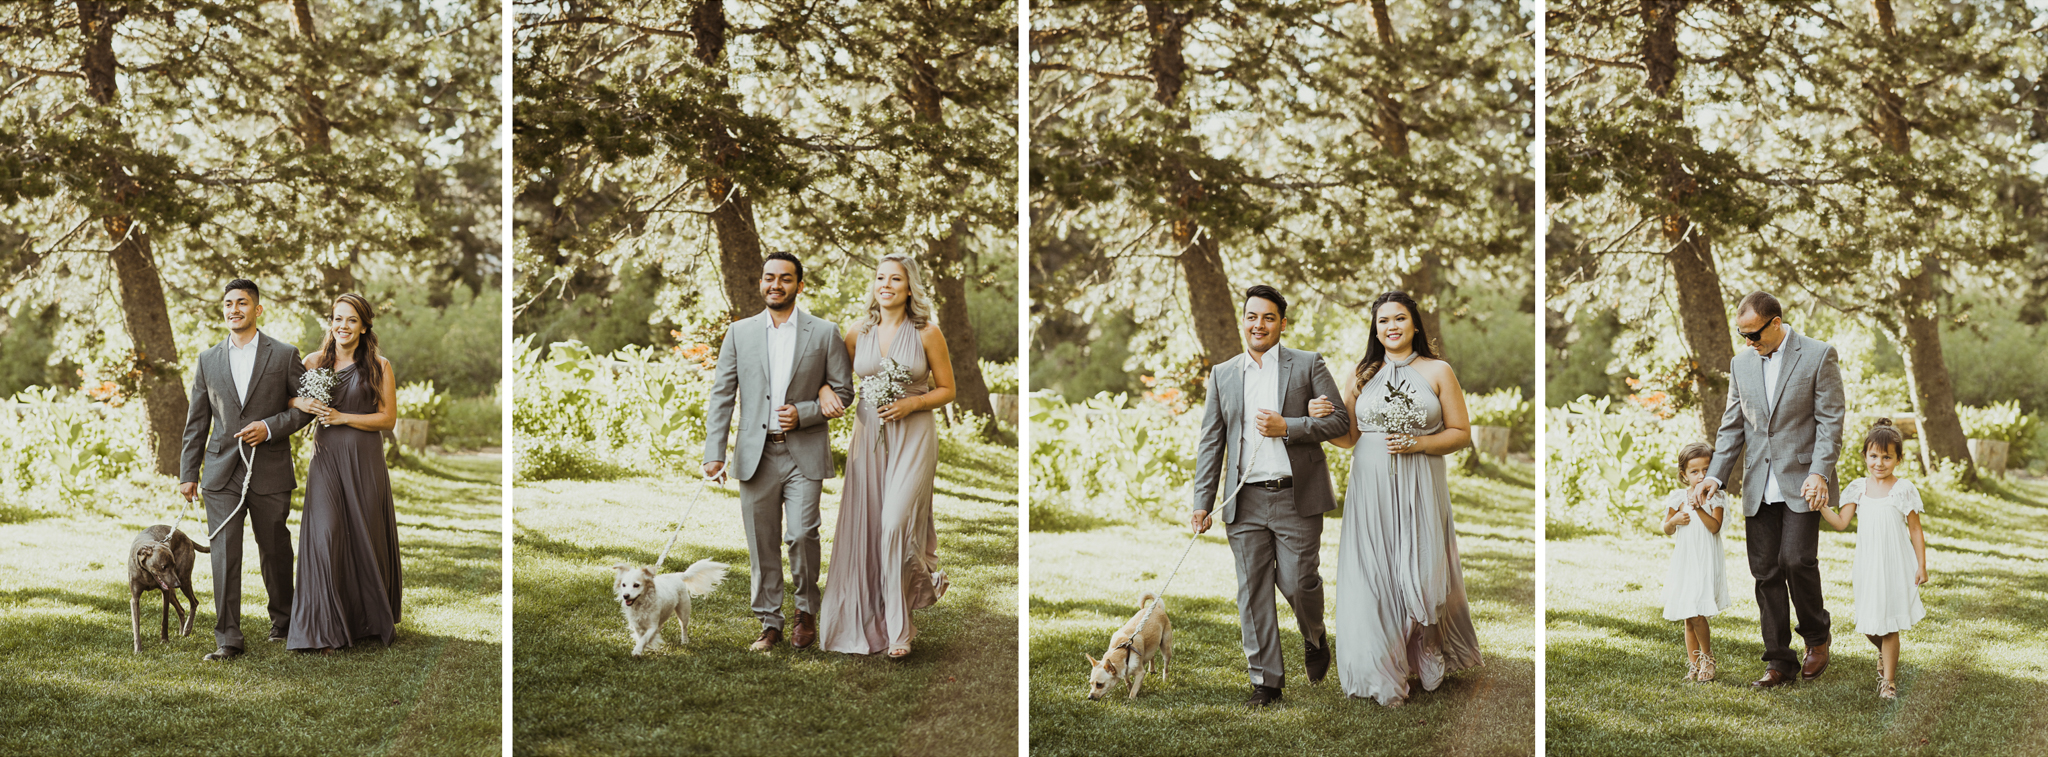 ©Isaiah & Taylor Photography -The Hideout Wedding, Kirkwood California, Lake Tahoe Wedding Photographer-135.jpg